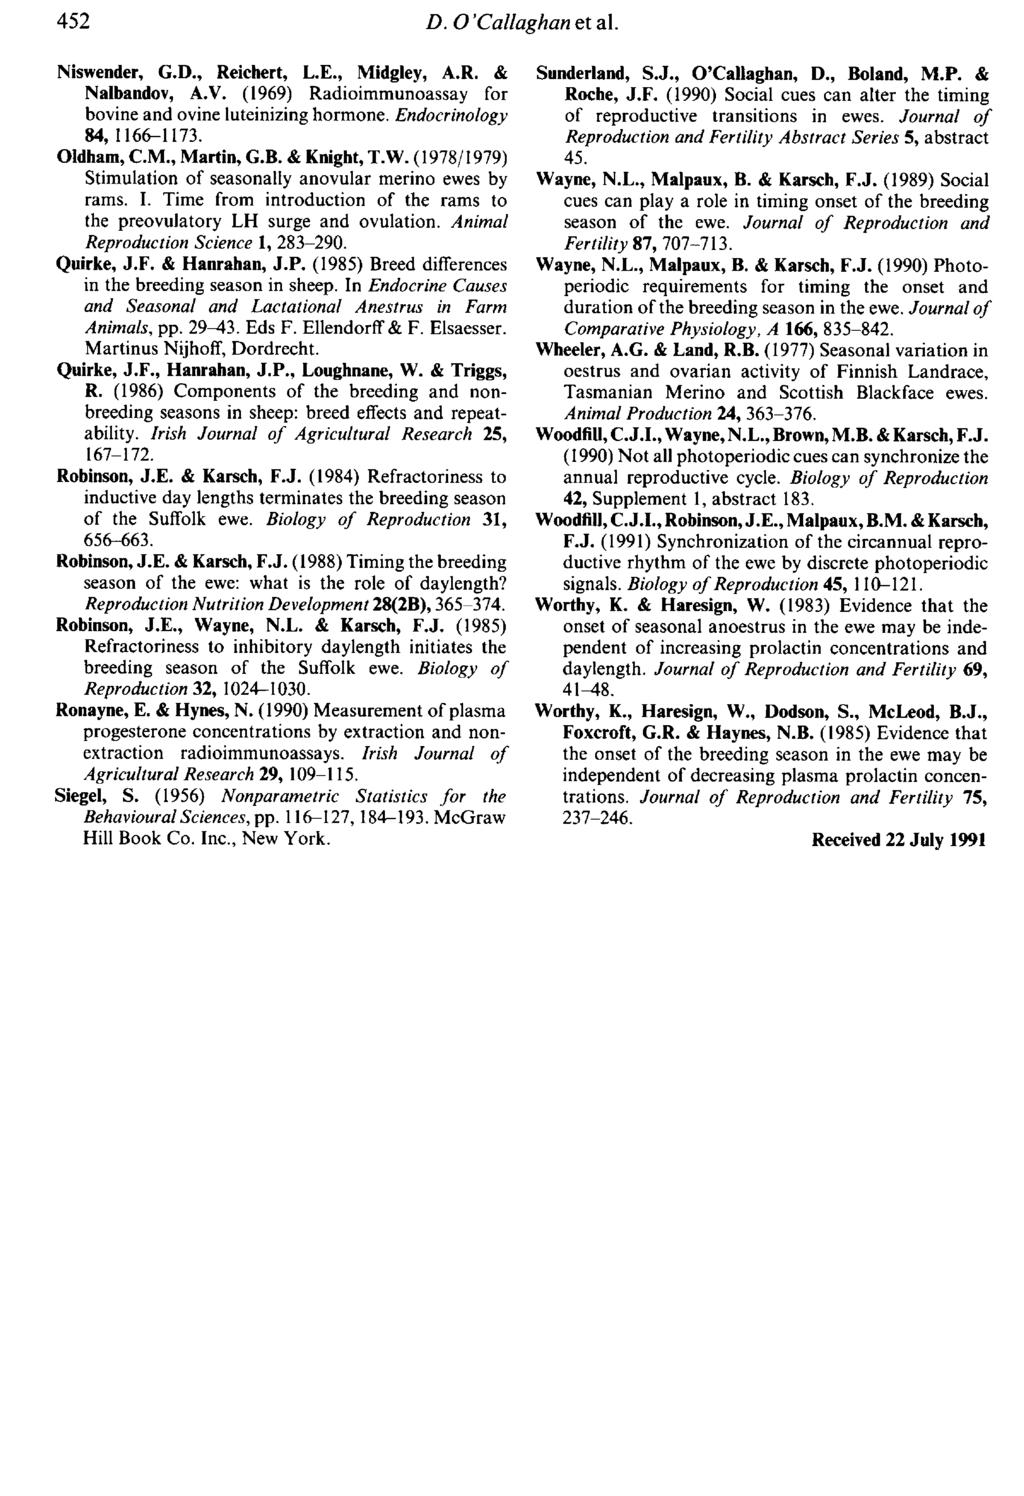 Niswender, G.D., Reichert, L.E., Midgley, A.R. & Nalbandov, A.V. (1969) Radioimmunoassay for bovine and ovine luteinizing hormone. Endocrinology 84,1166-1173. Oldham, CM., Martin, G.B. & Knight, T.W.